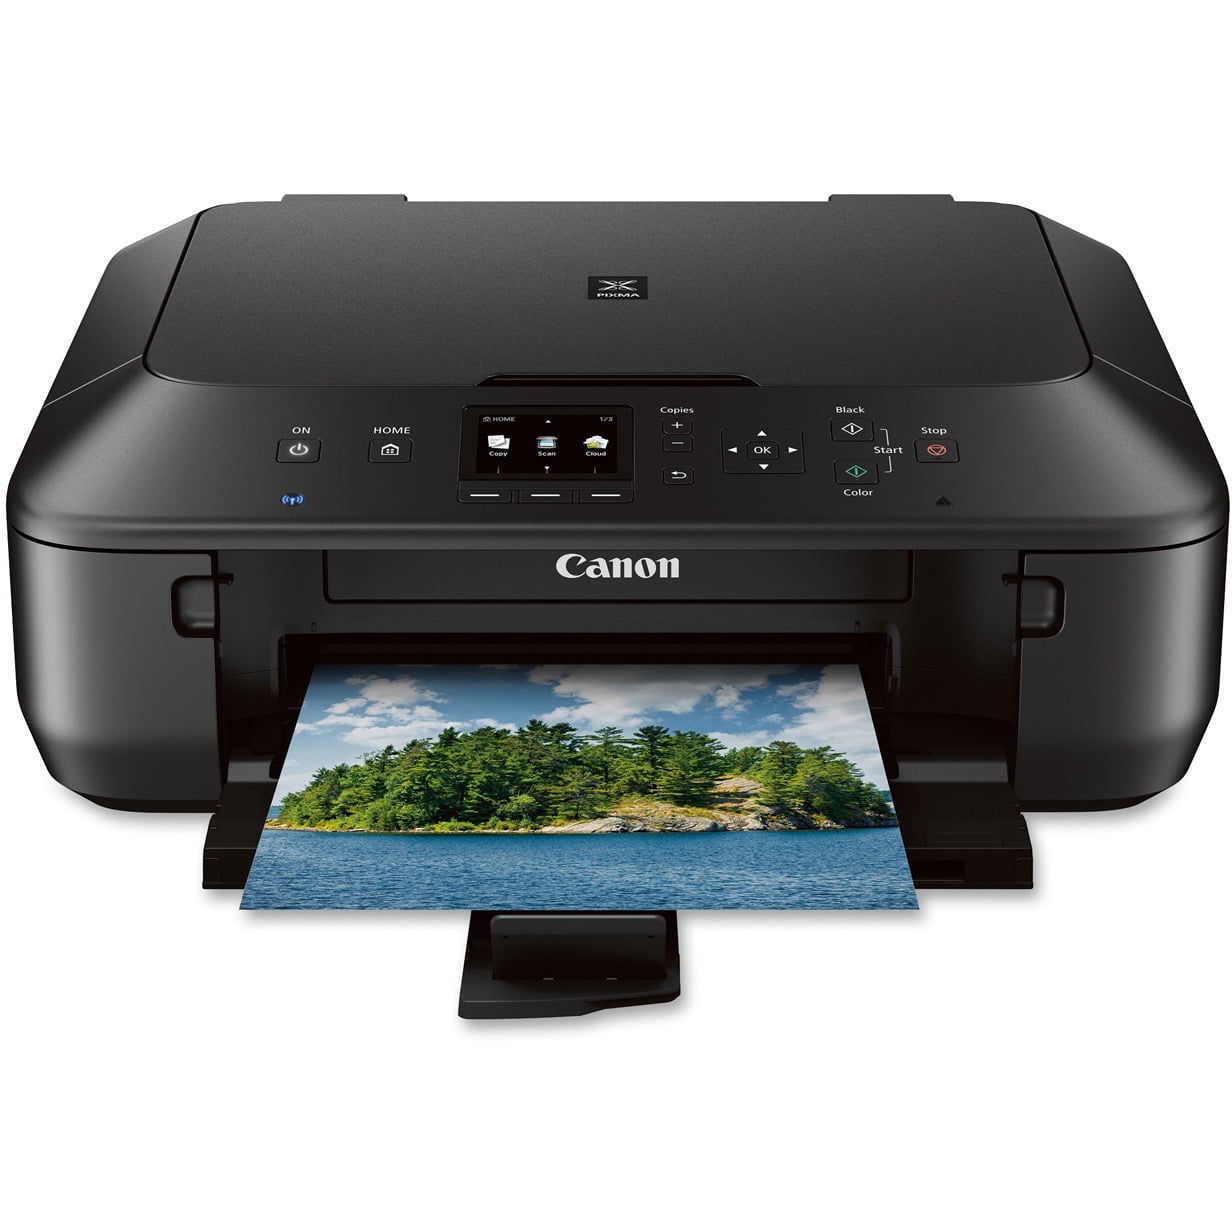 Canon a multifunction printer